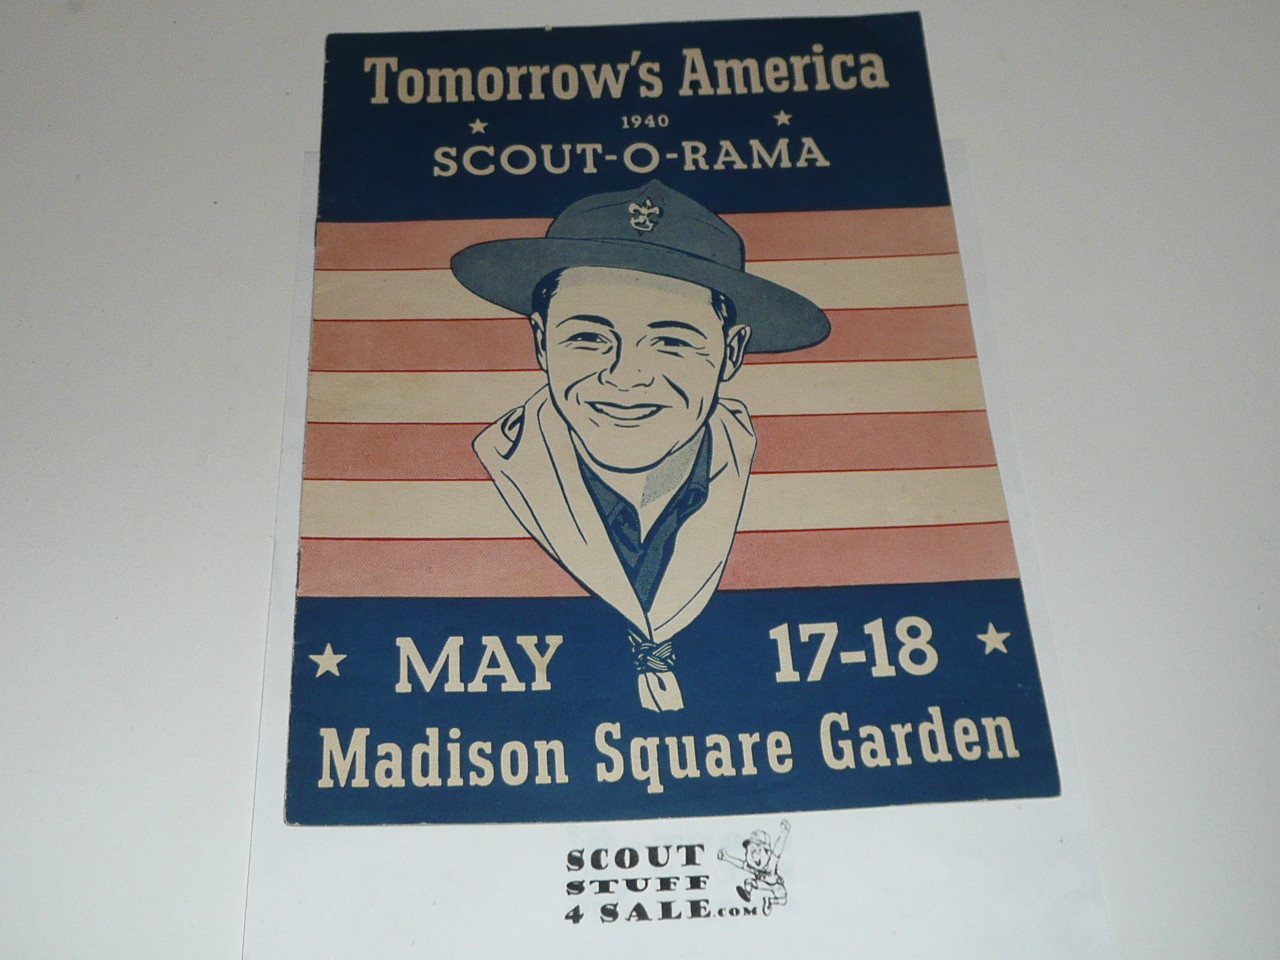 1940 Tomorrow's America Scout-O-Rama Program, Madison Square Garden